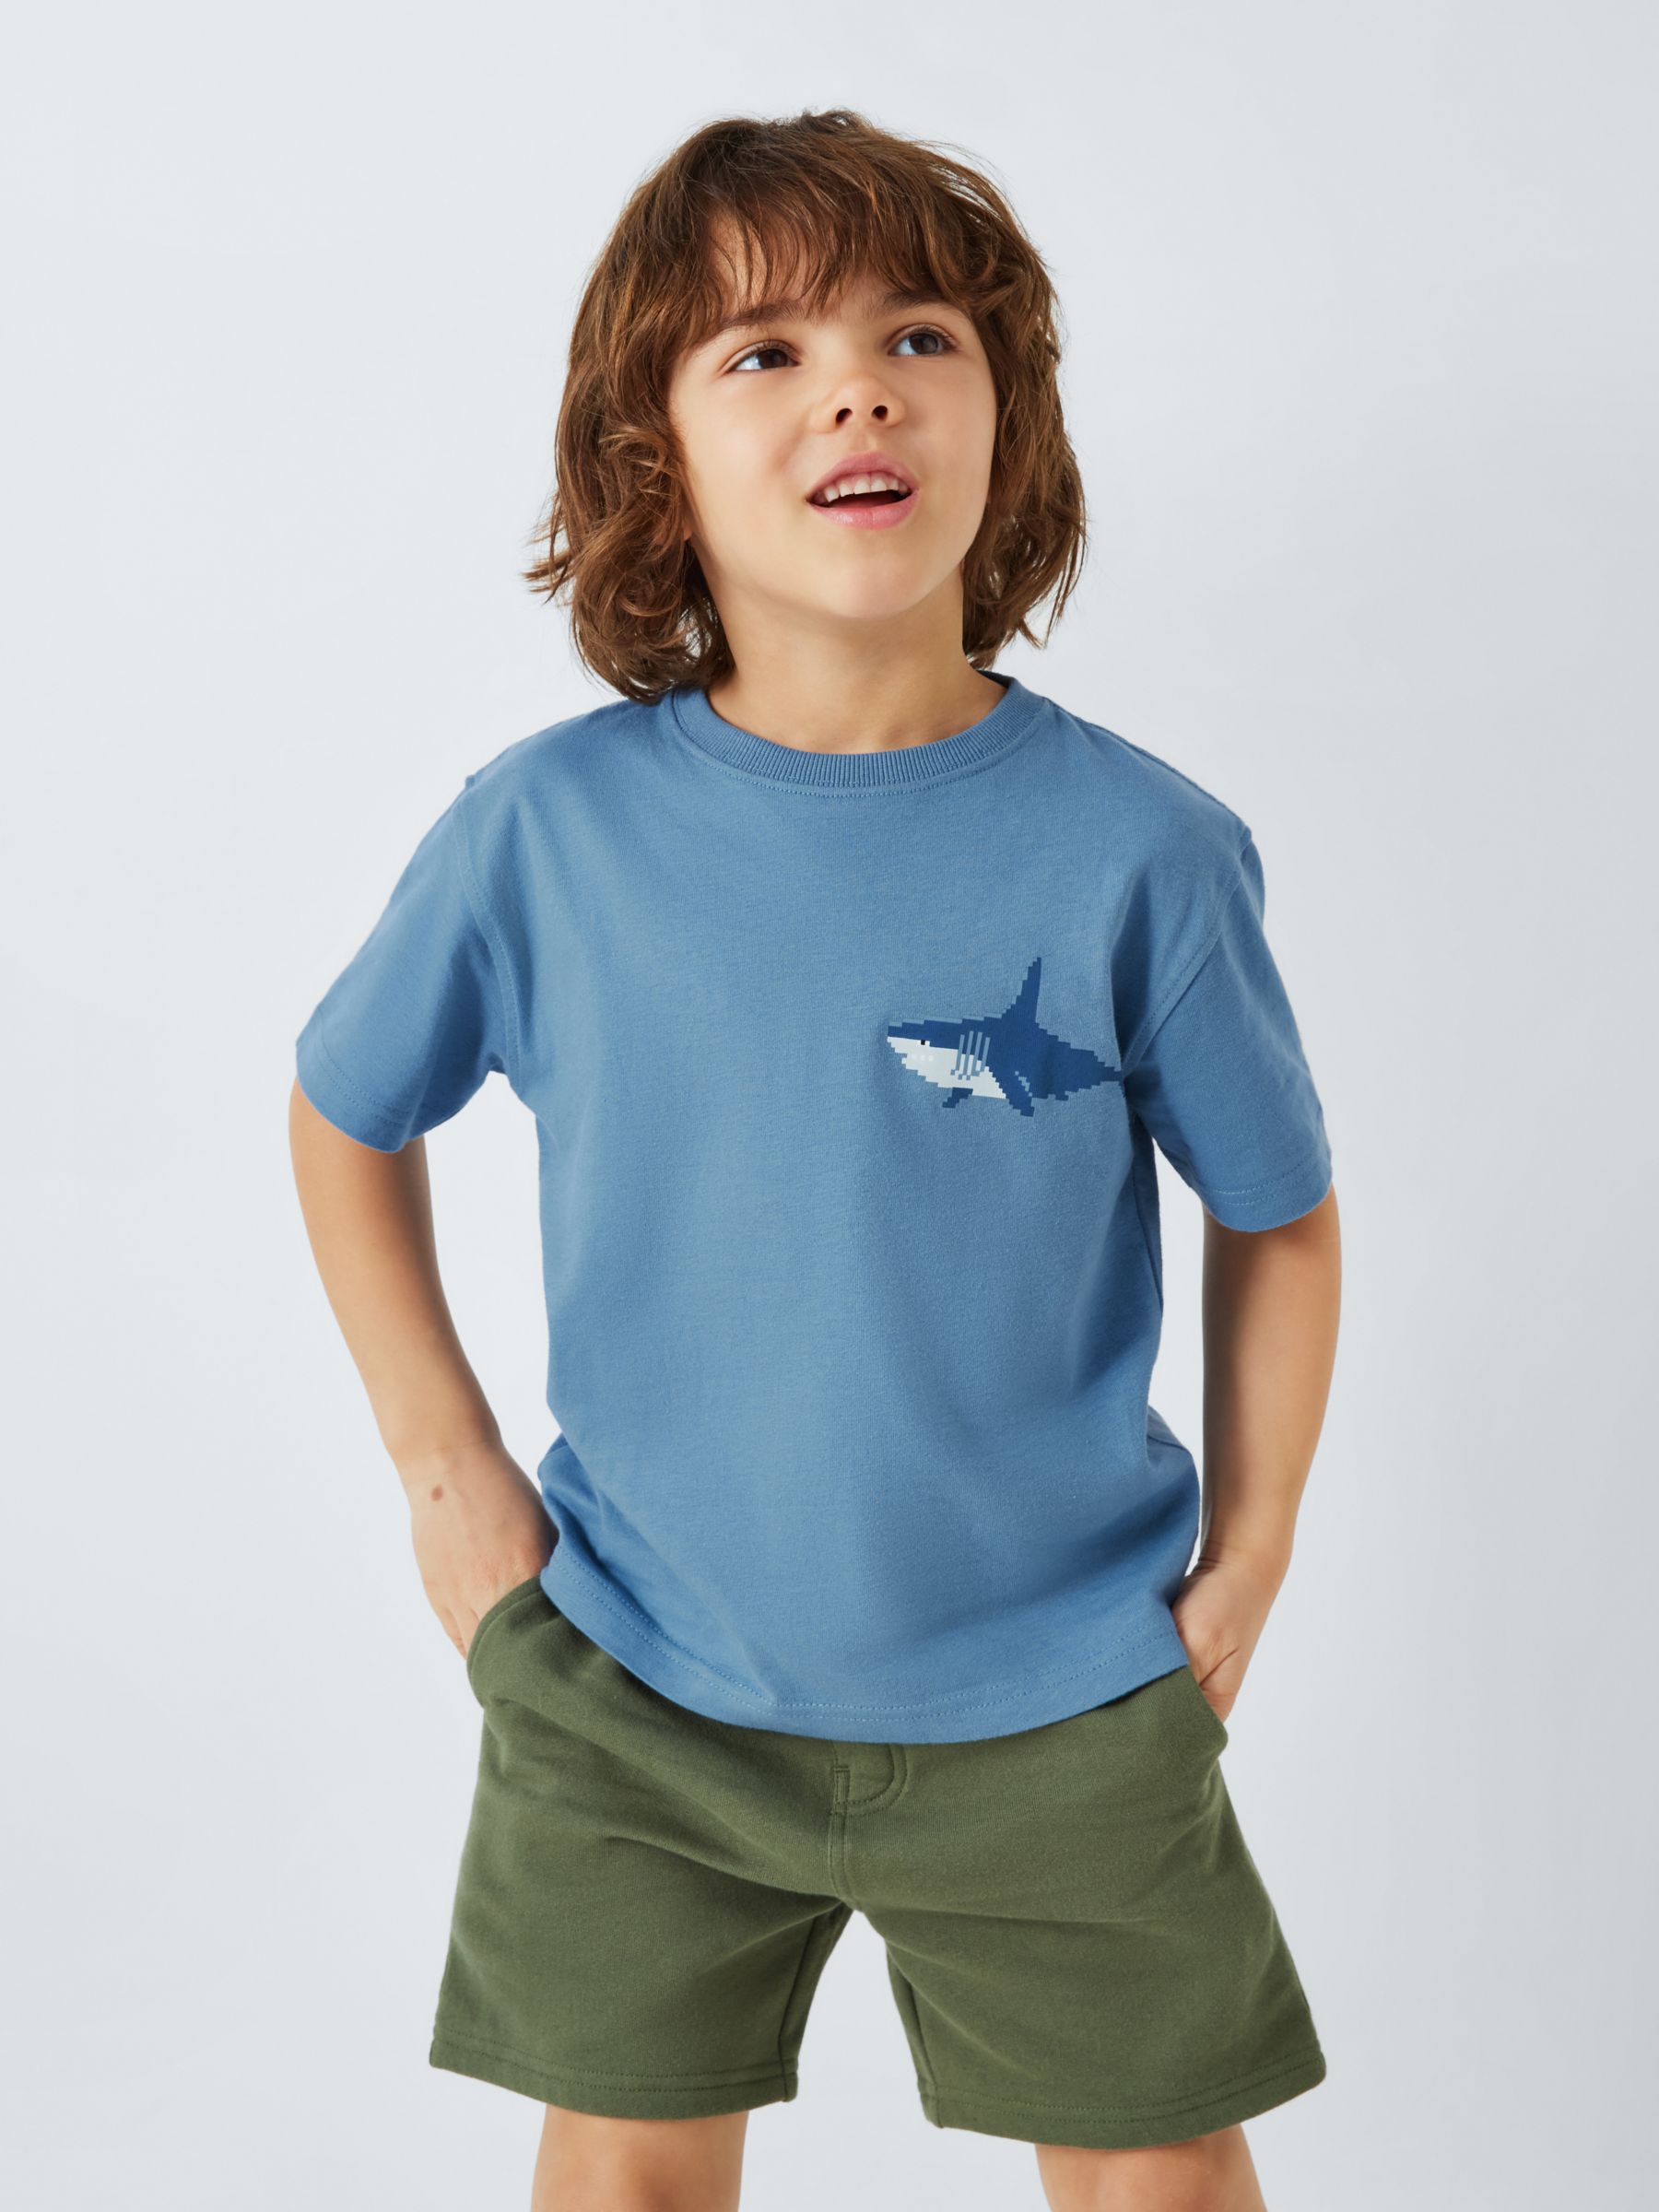 John Lewis Kids' Graphic Shark T-Shirt, Blue, 10 years